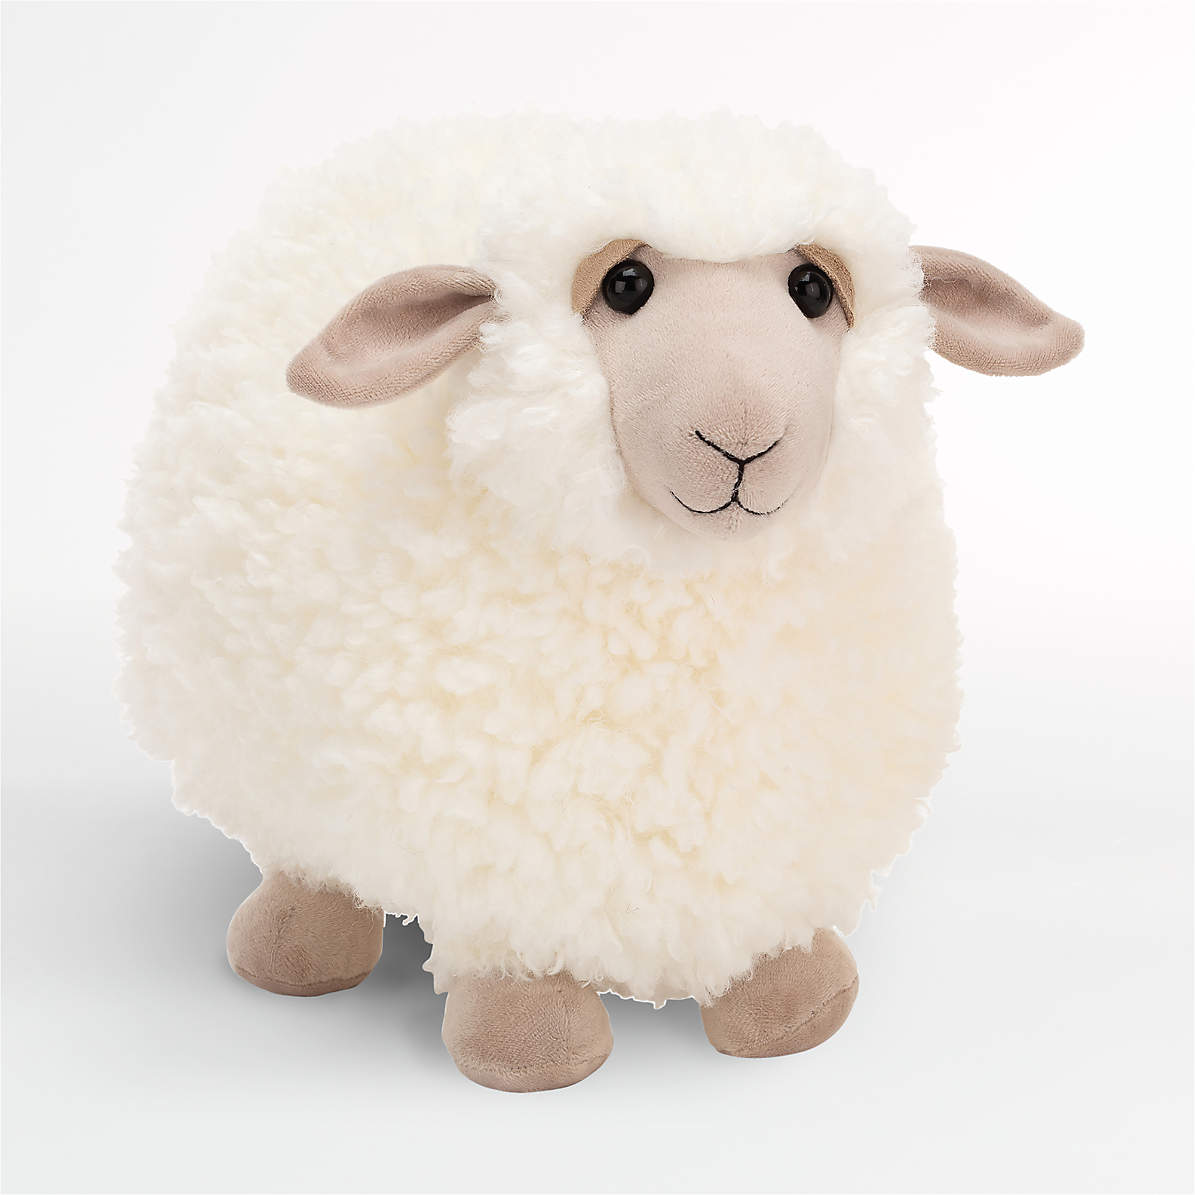 stuffed sheep toy